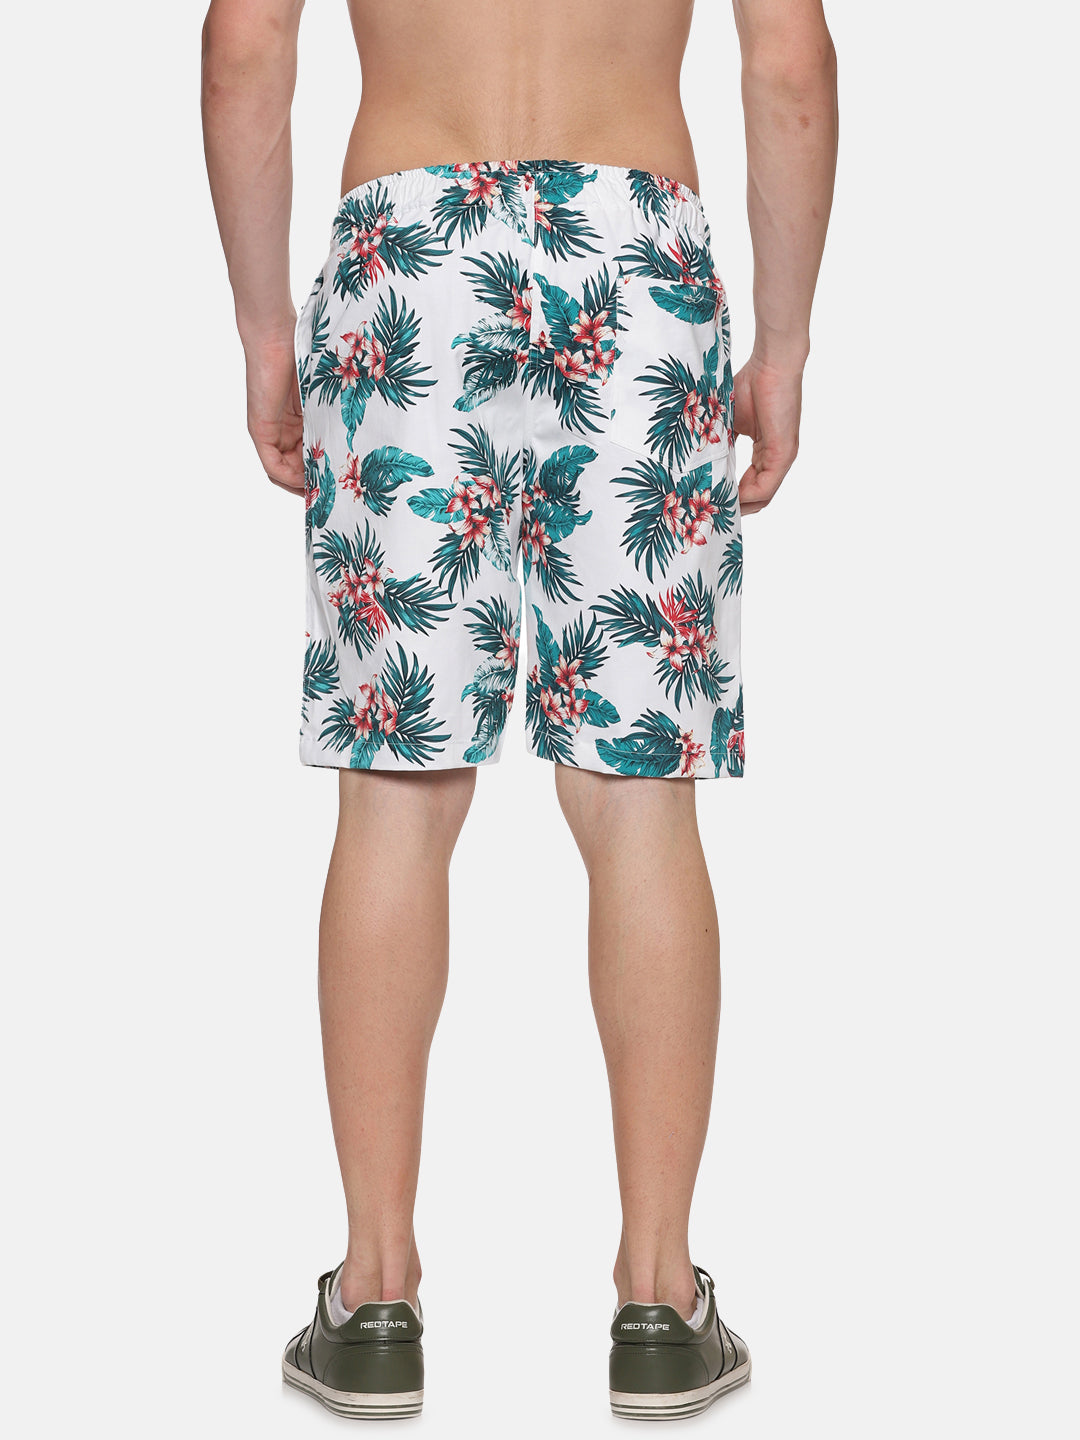 Carnival Men's Tropical Printed Shorts - Tusok